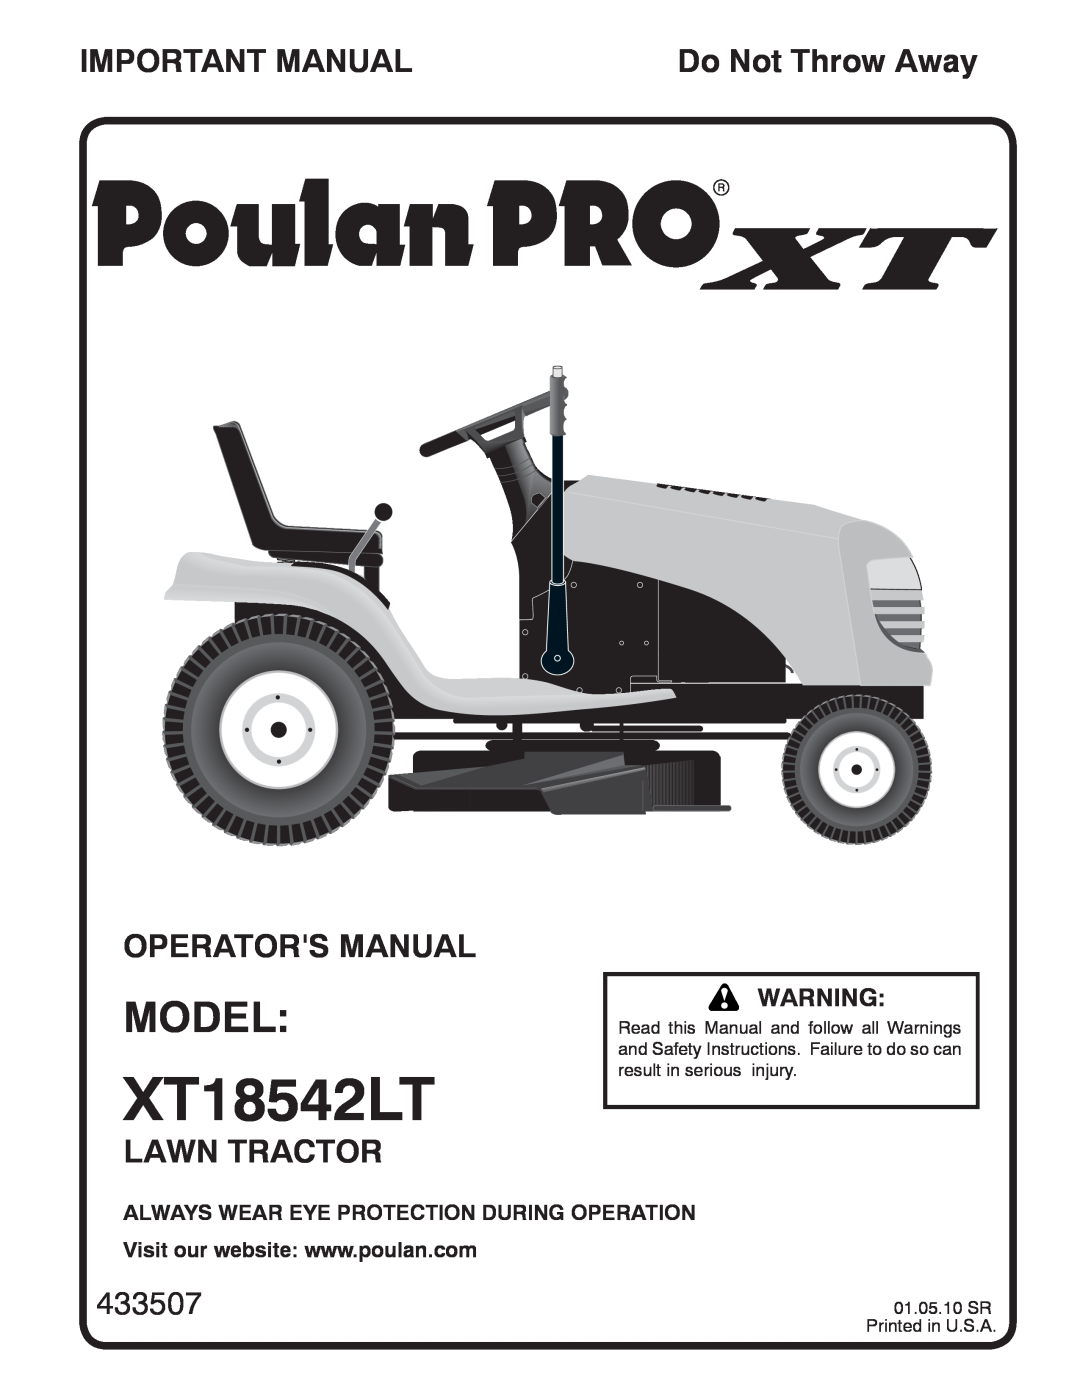 Poulan 433507, 96012010900 manual Model, Important Manual, Operators Manual, Lawn Tractor, XT18542LT, Do Not Throw Away 